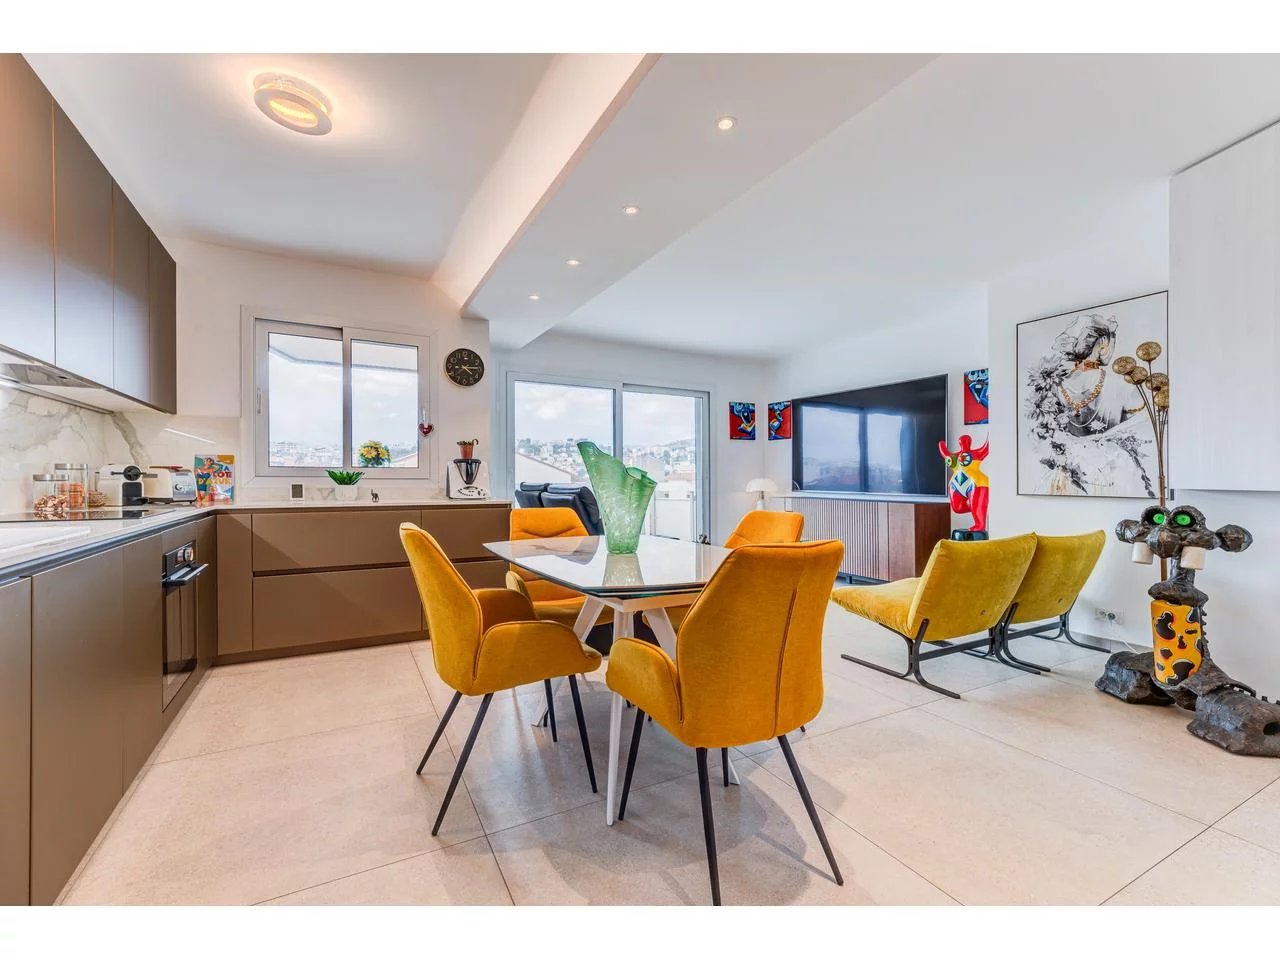 Appartement  3 Locali 68m2  In vendita   474 000 €